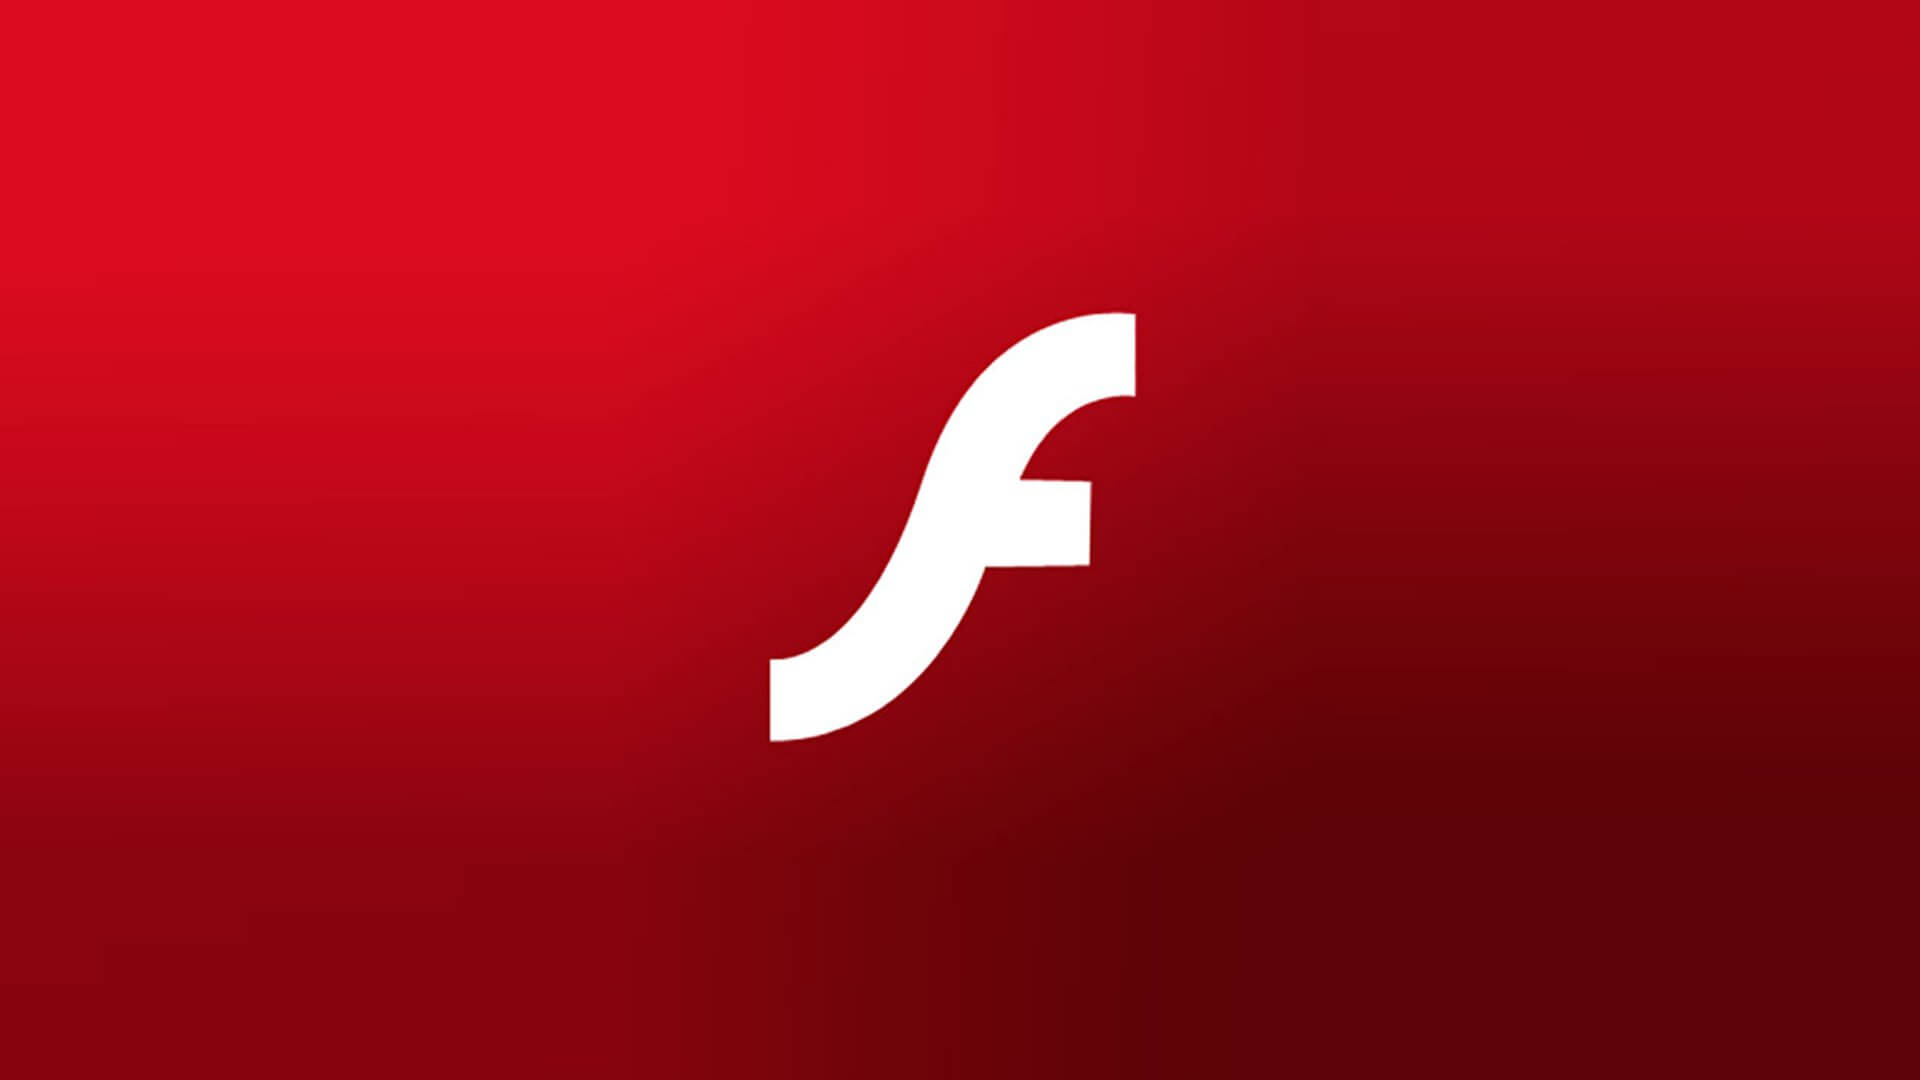 Adobe flash player games